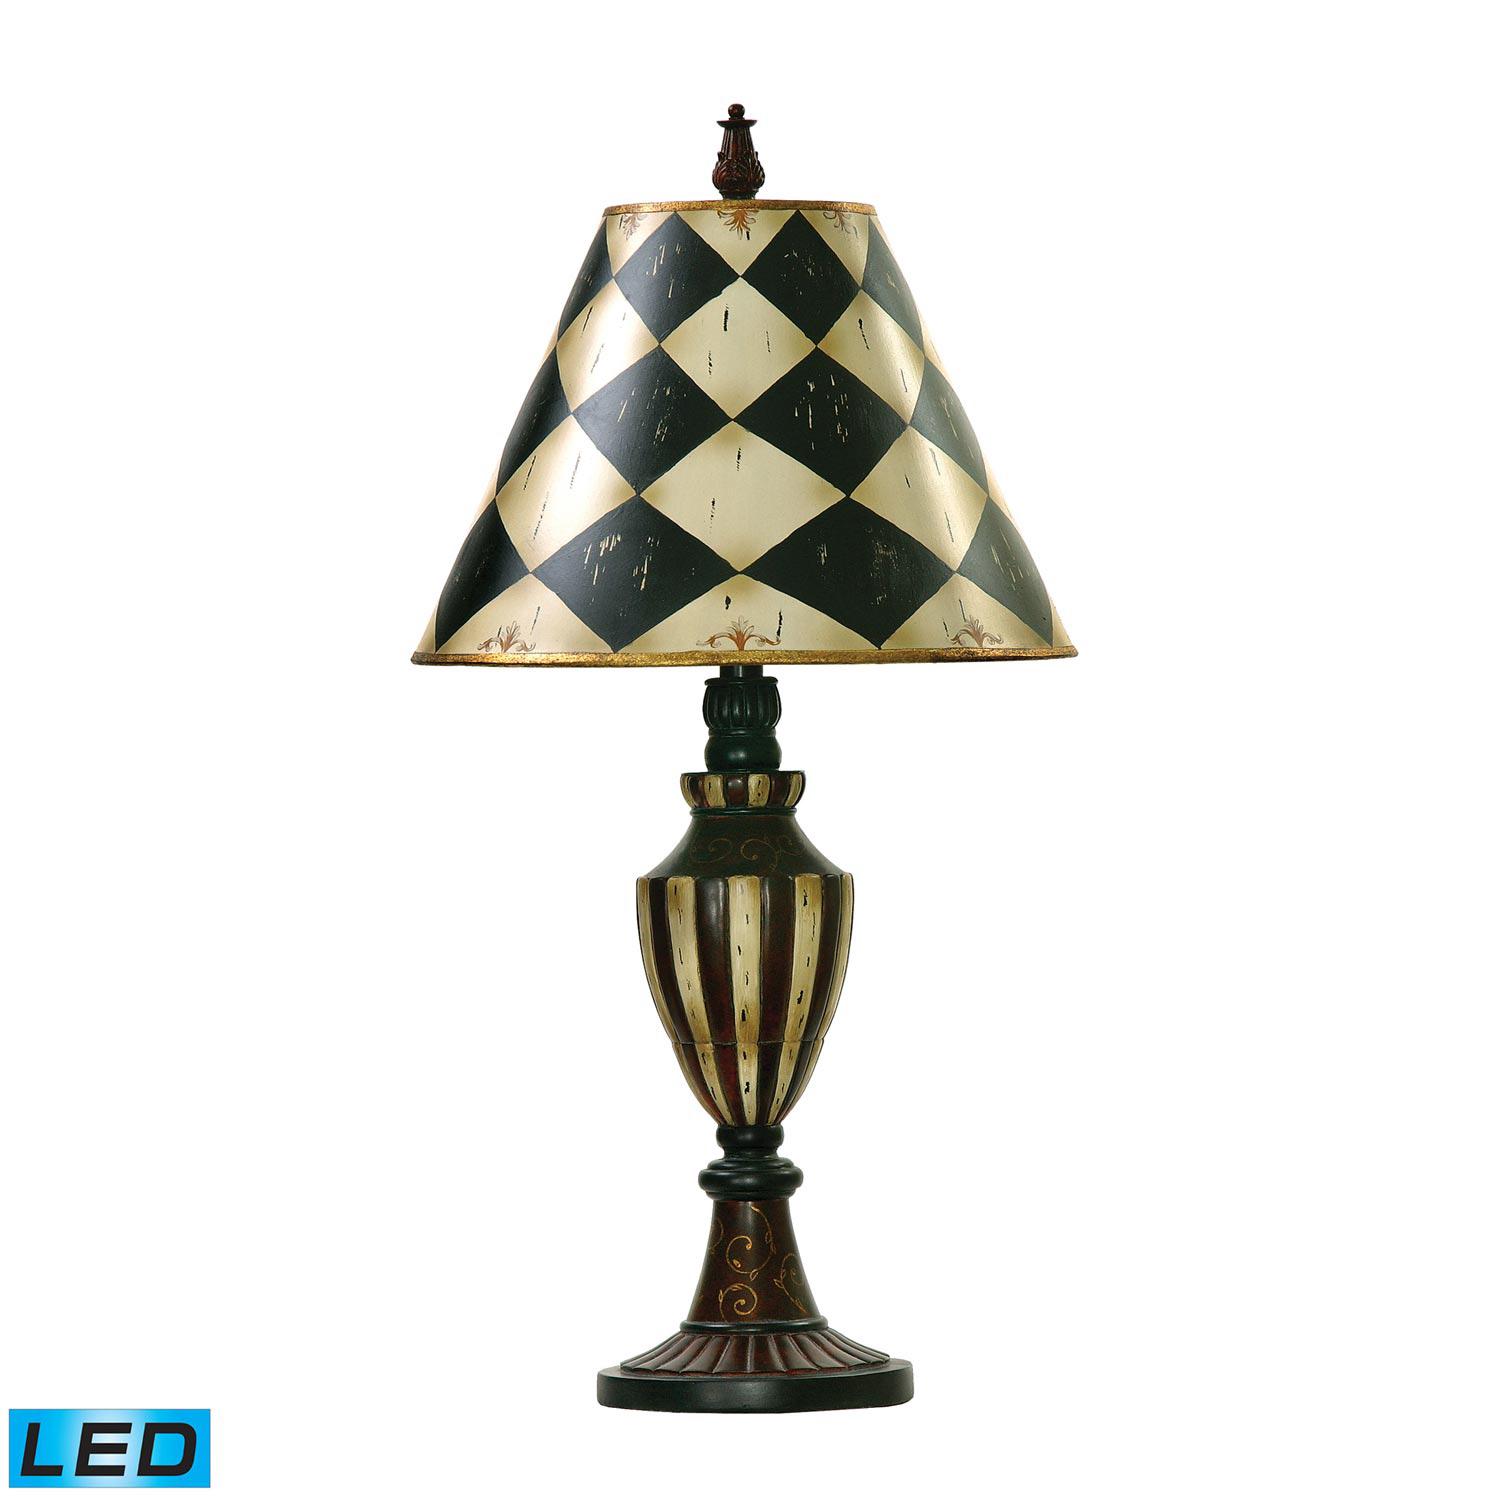 Elk Lighting 91-342-LED Harlequin and Stripe Urn Table Lamp - Black / Antique White